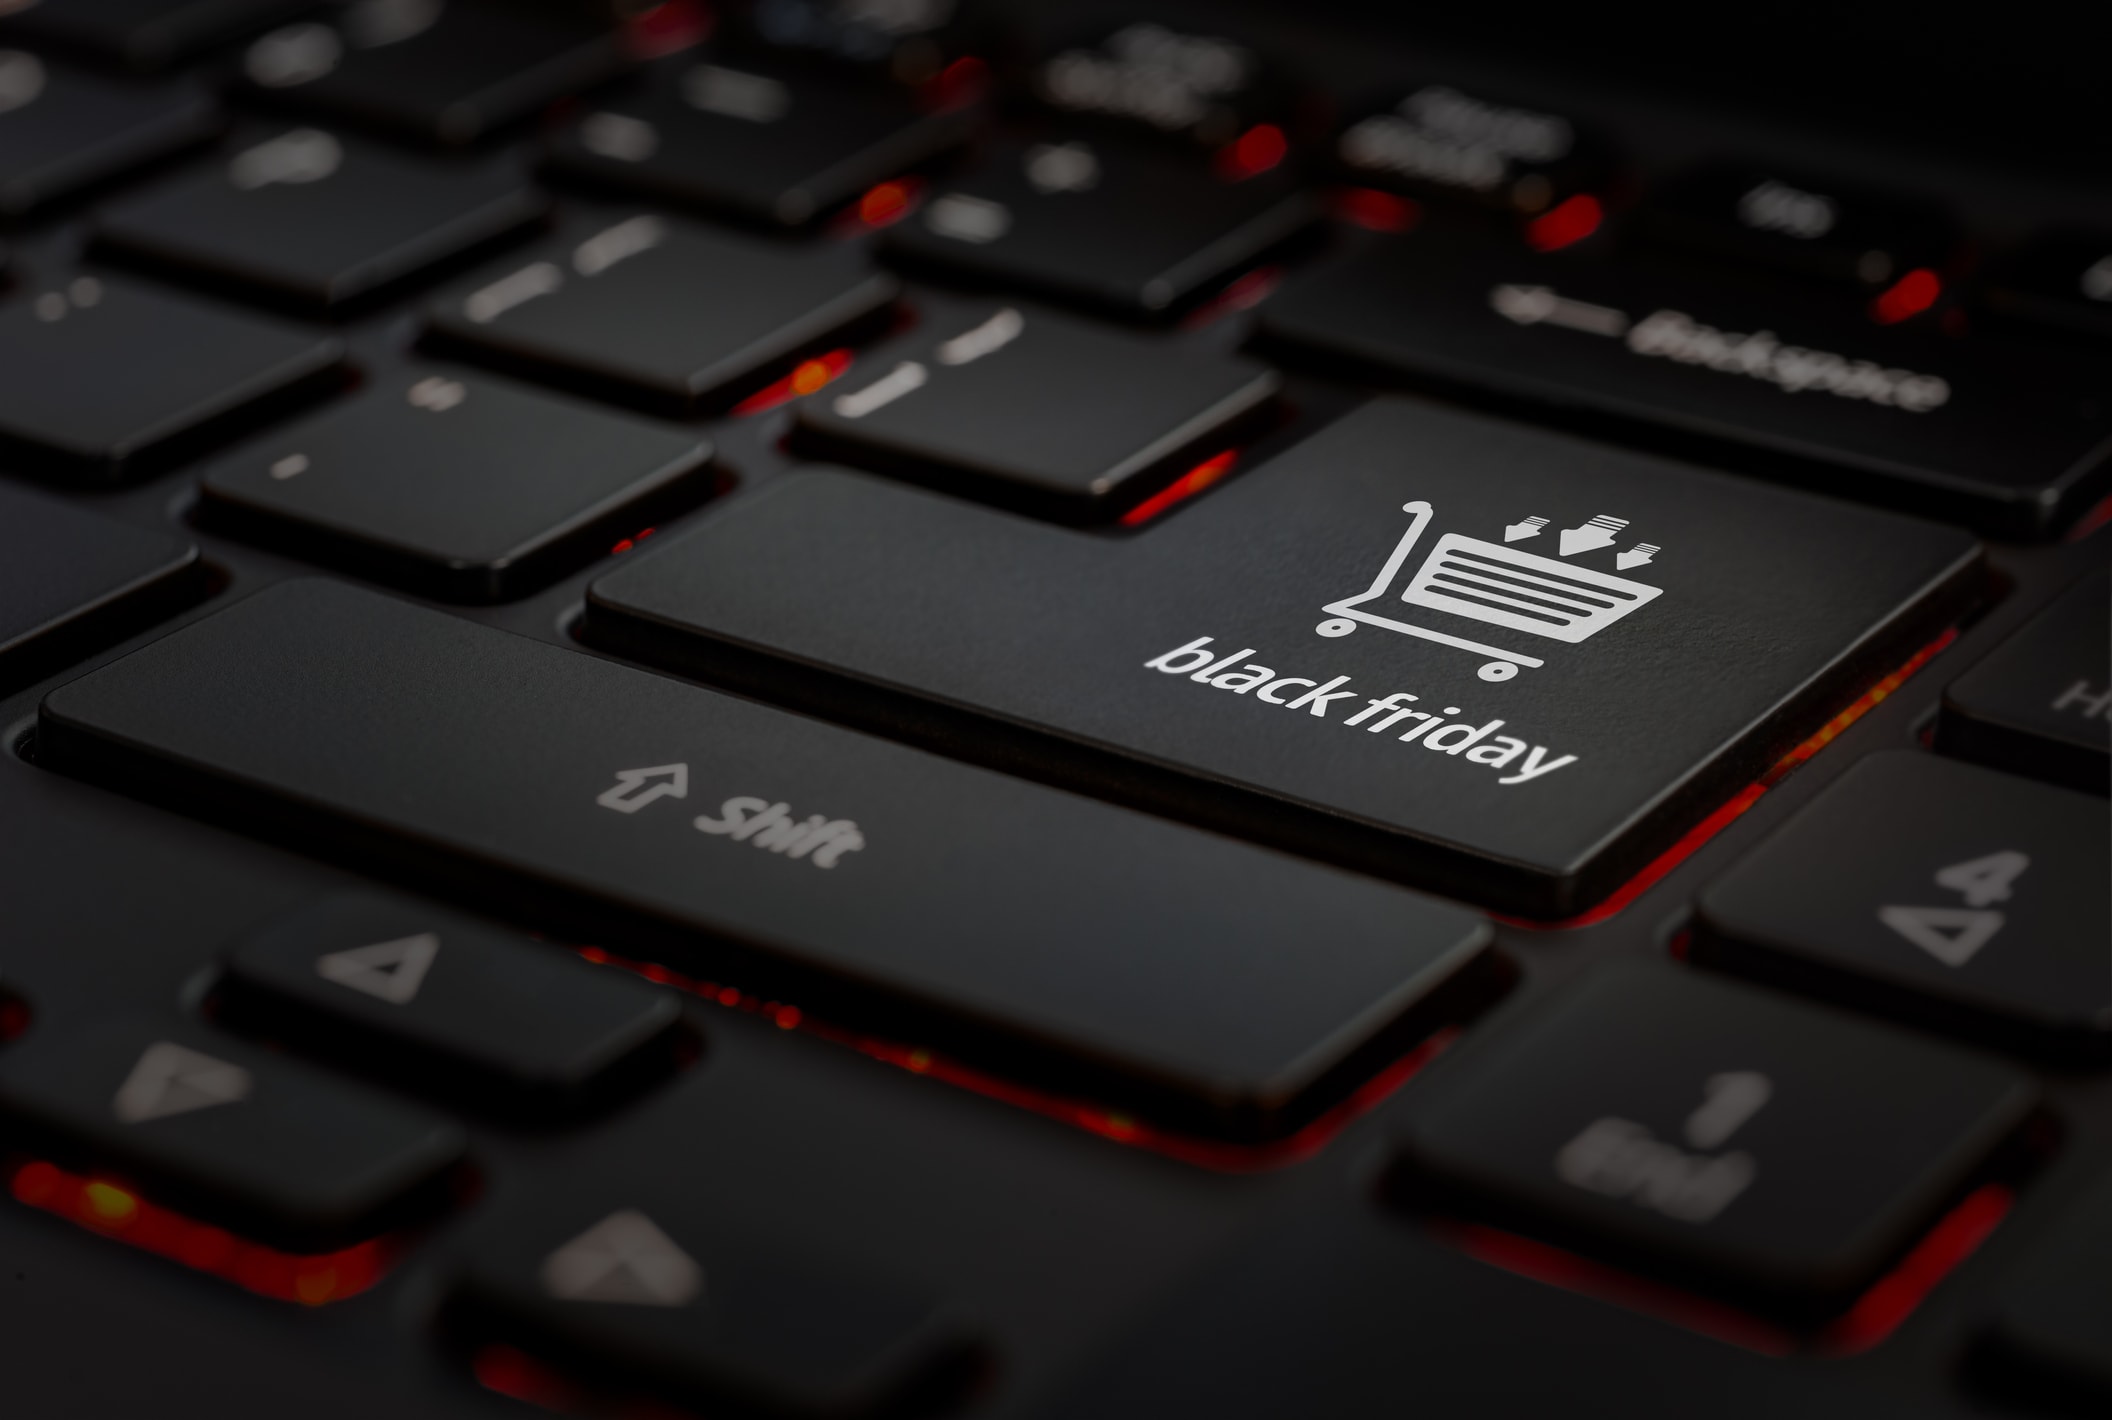 Black Friday button on keyboard